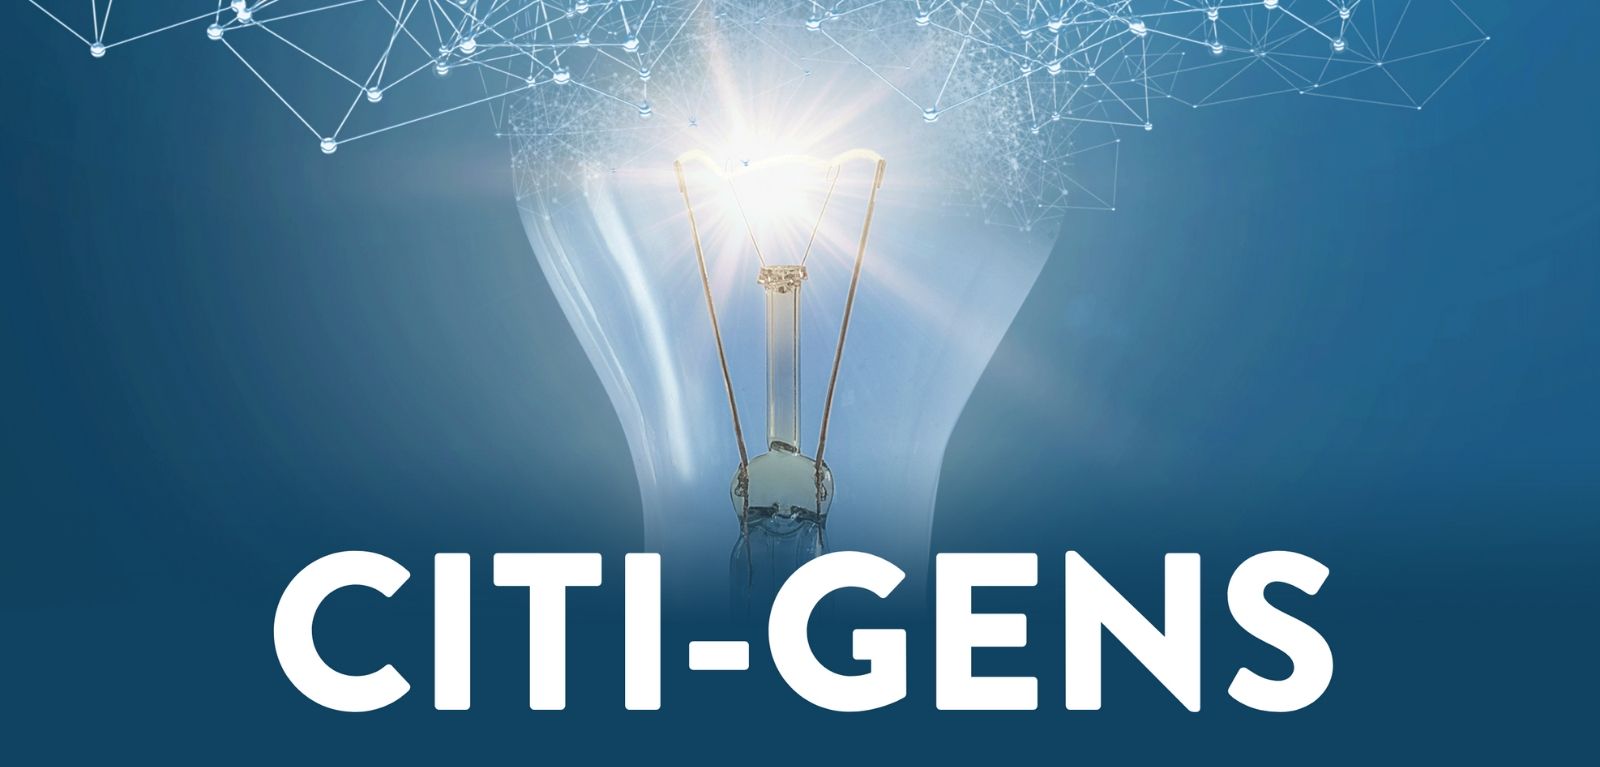 Citi-gens logo with light bulb 